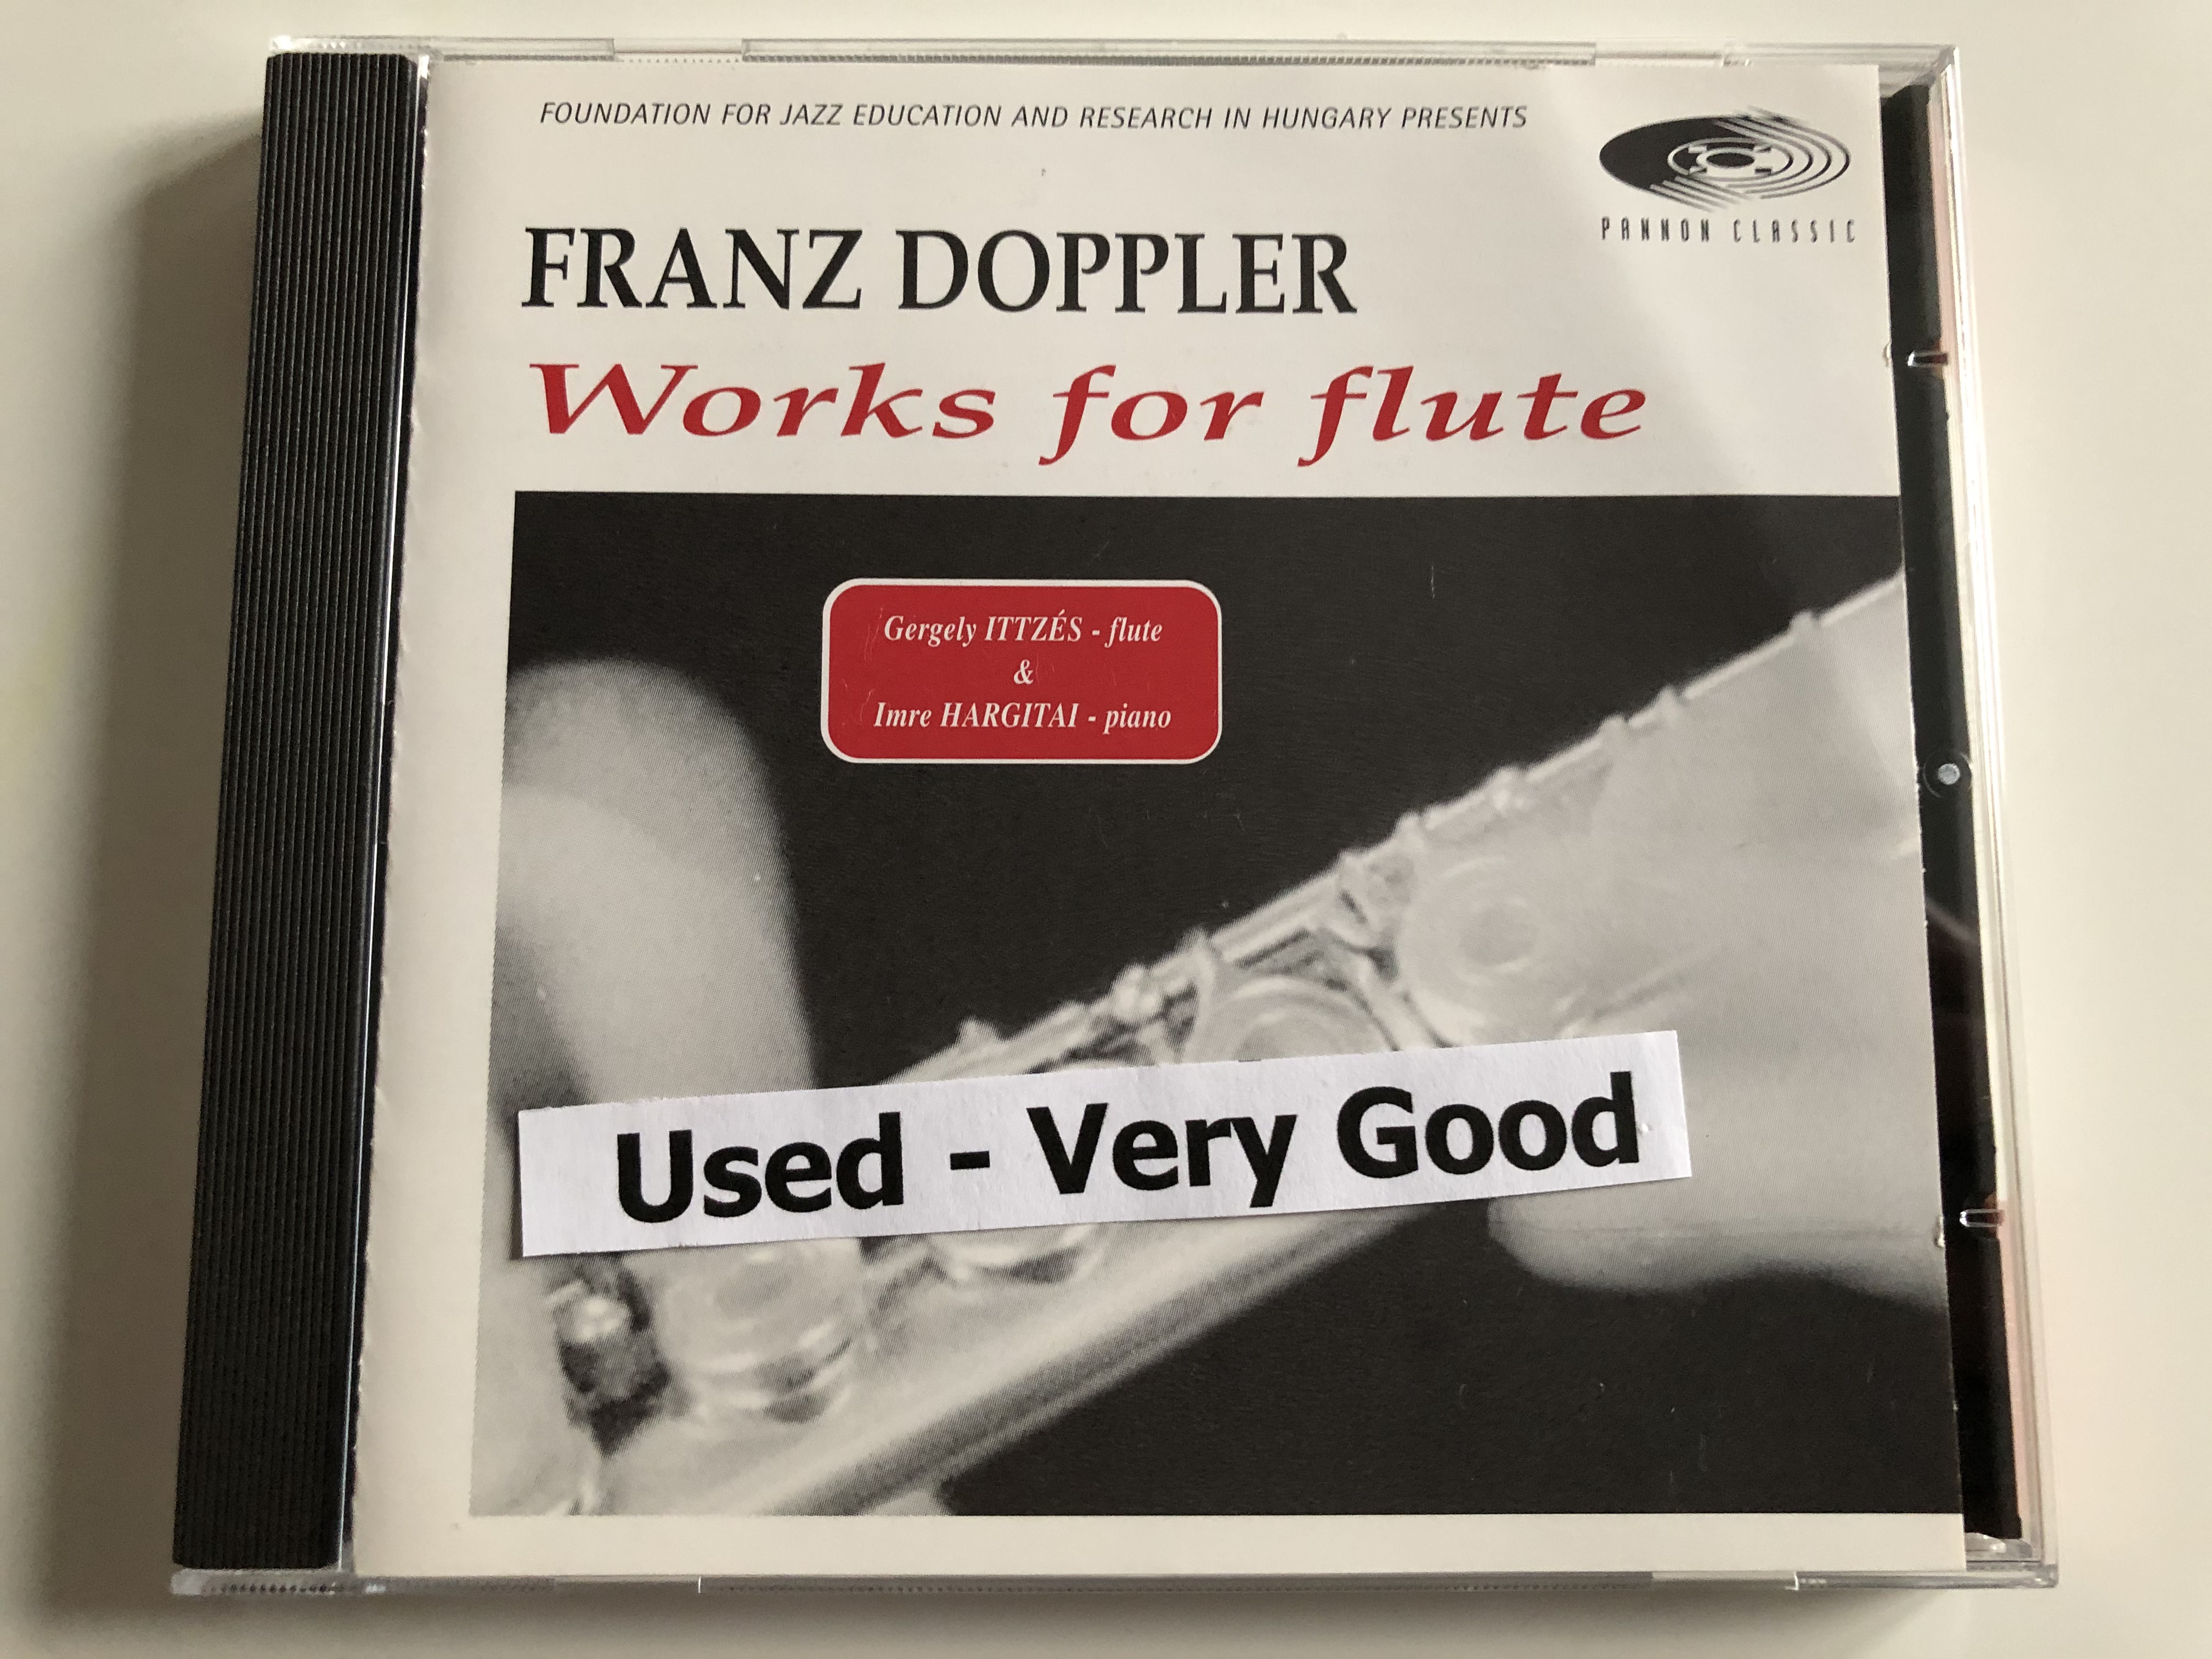 franz-doppler-works-for-flute-flute-gergely-ittzes-piano-imre-hargitai-pannon-classic-audio-cd-1997-pcl-8001-1-.jpg